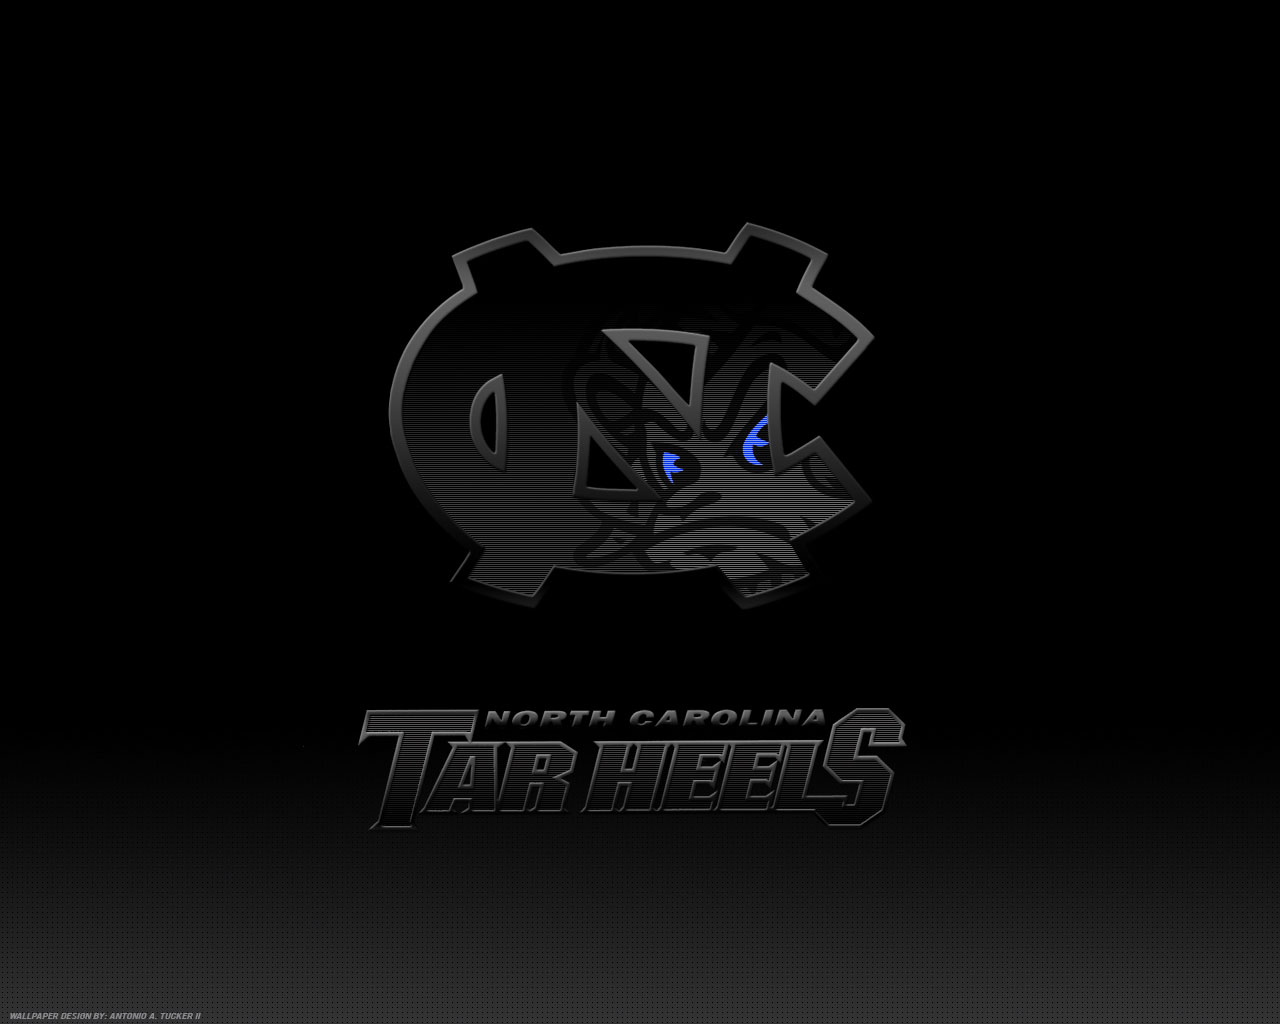 UNC Tar Heels Logo background wallpaper for desktop or web